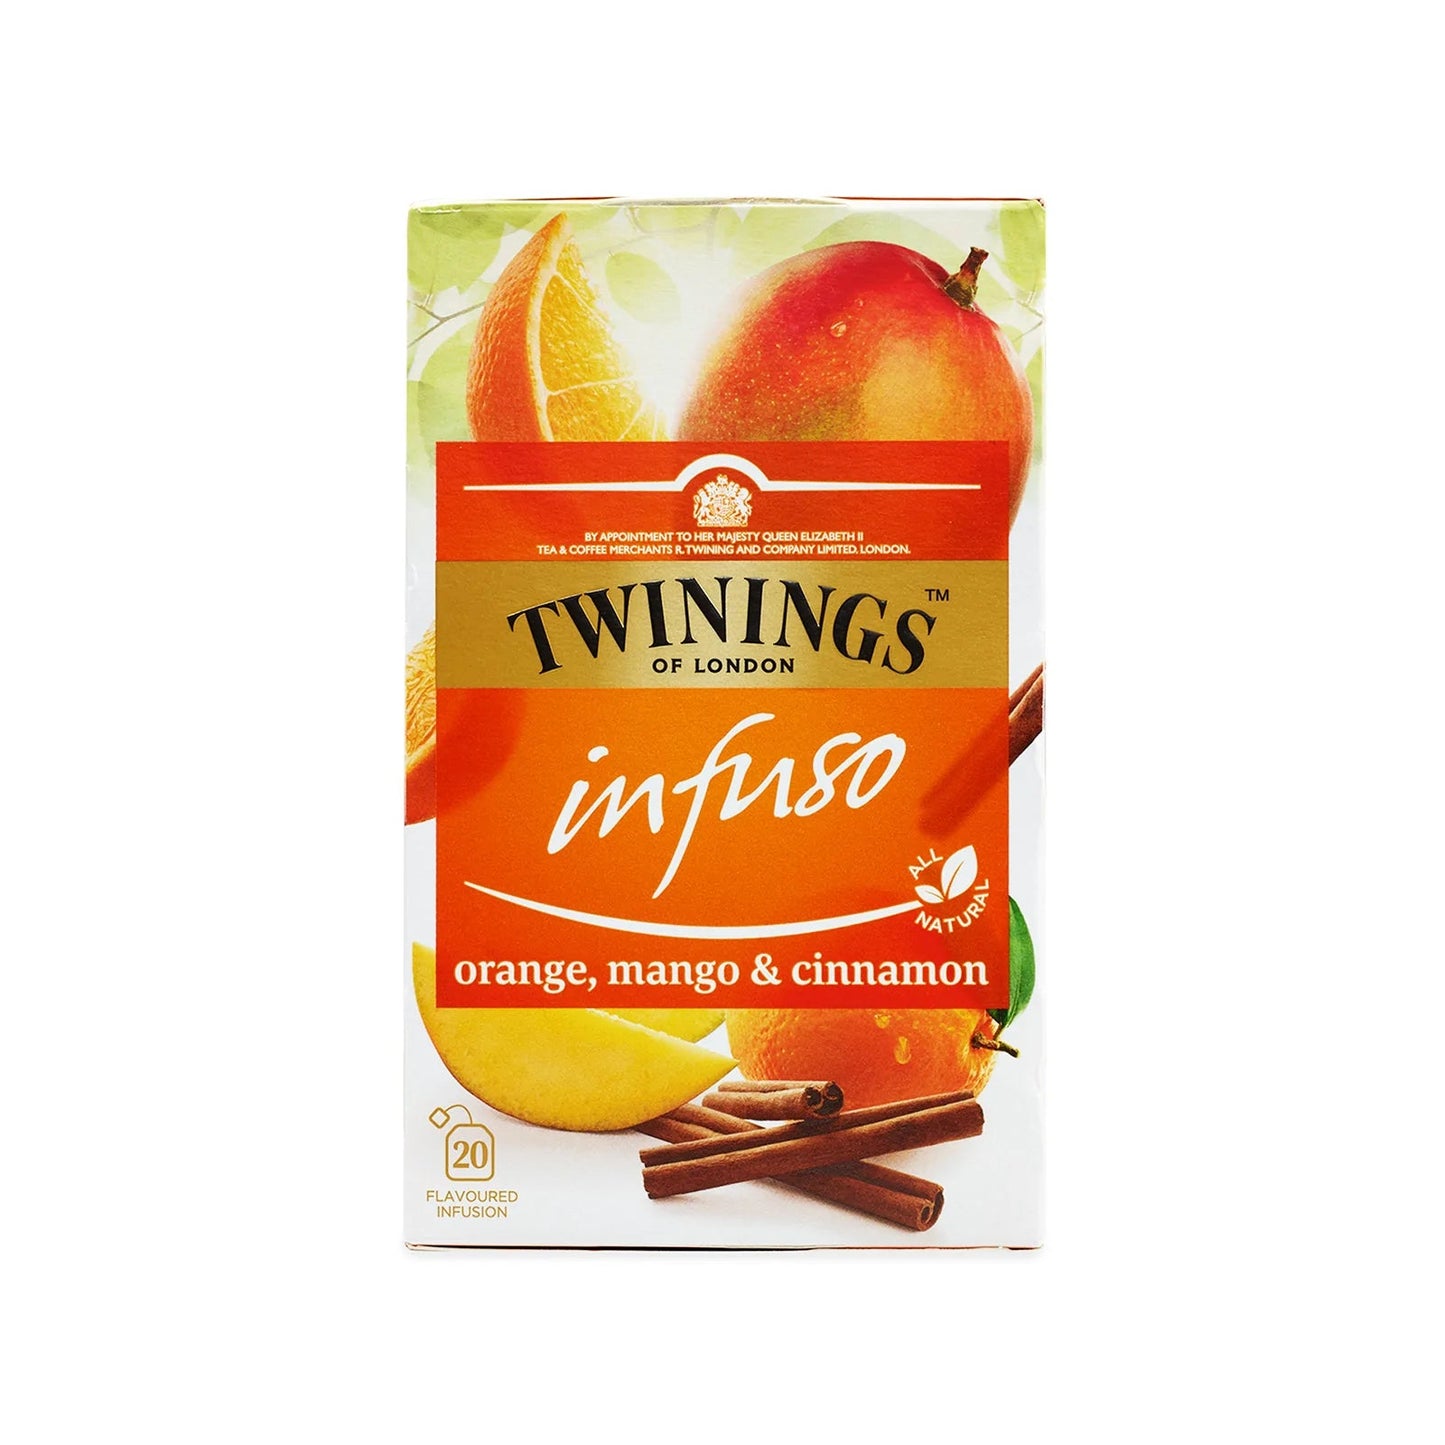 40 gram box of twinings infuso orange, mango & cinnamon